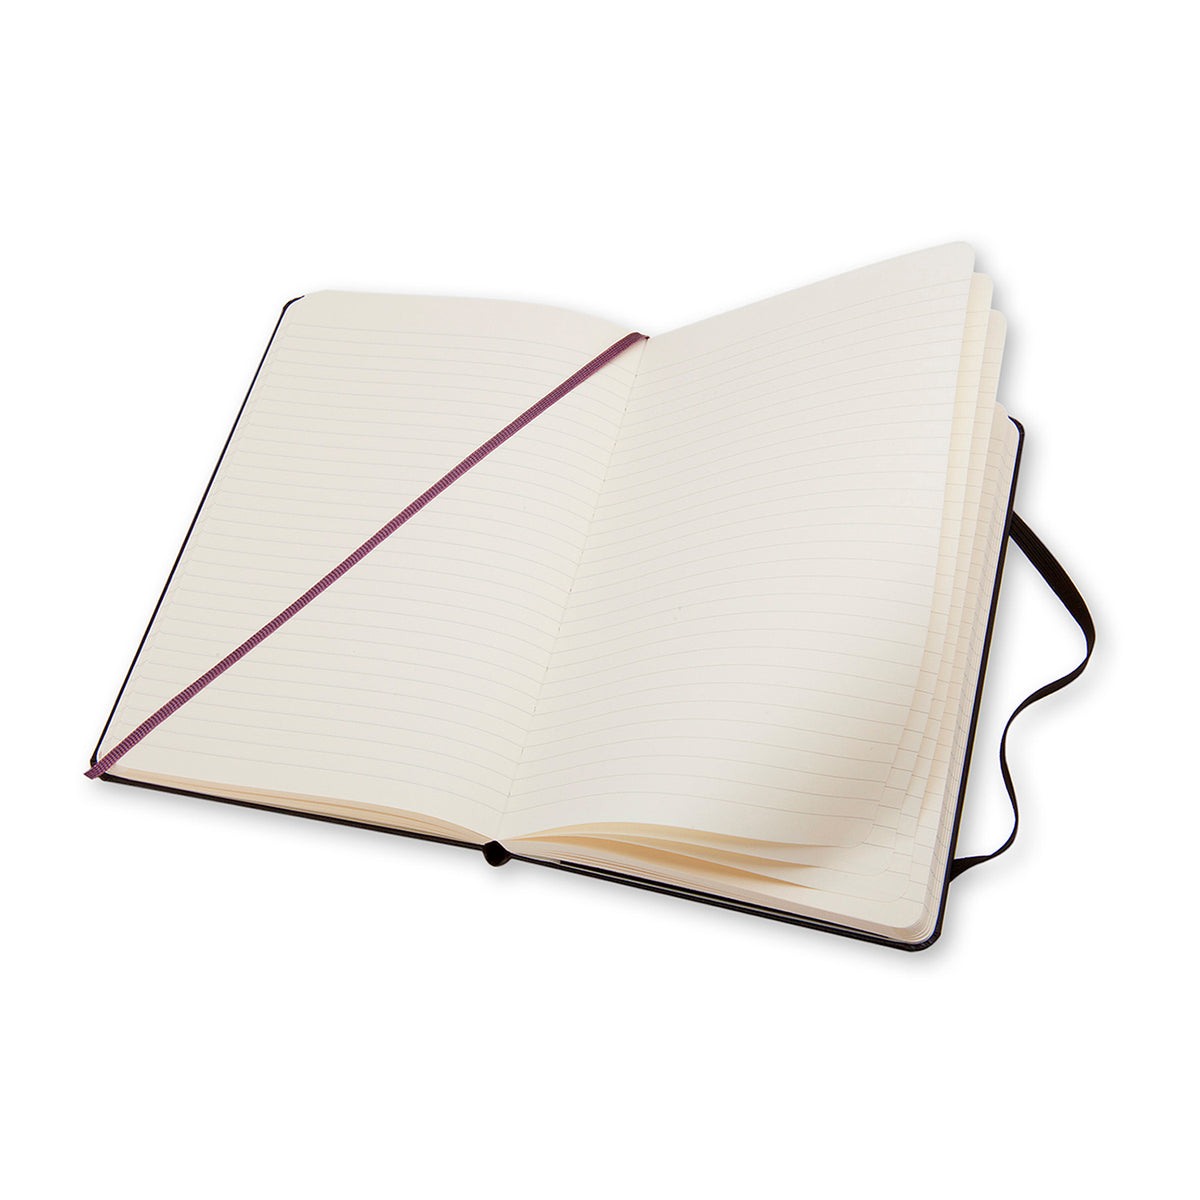 Moleskine - Classic Hard Cover Notebook - Ruled - Pocket - Black